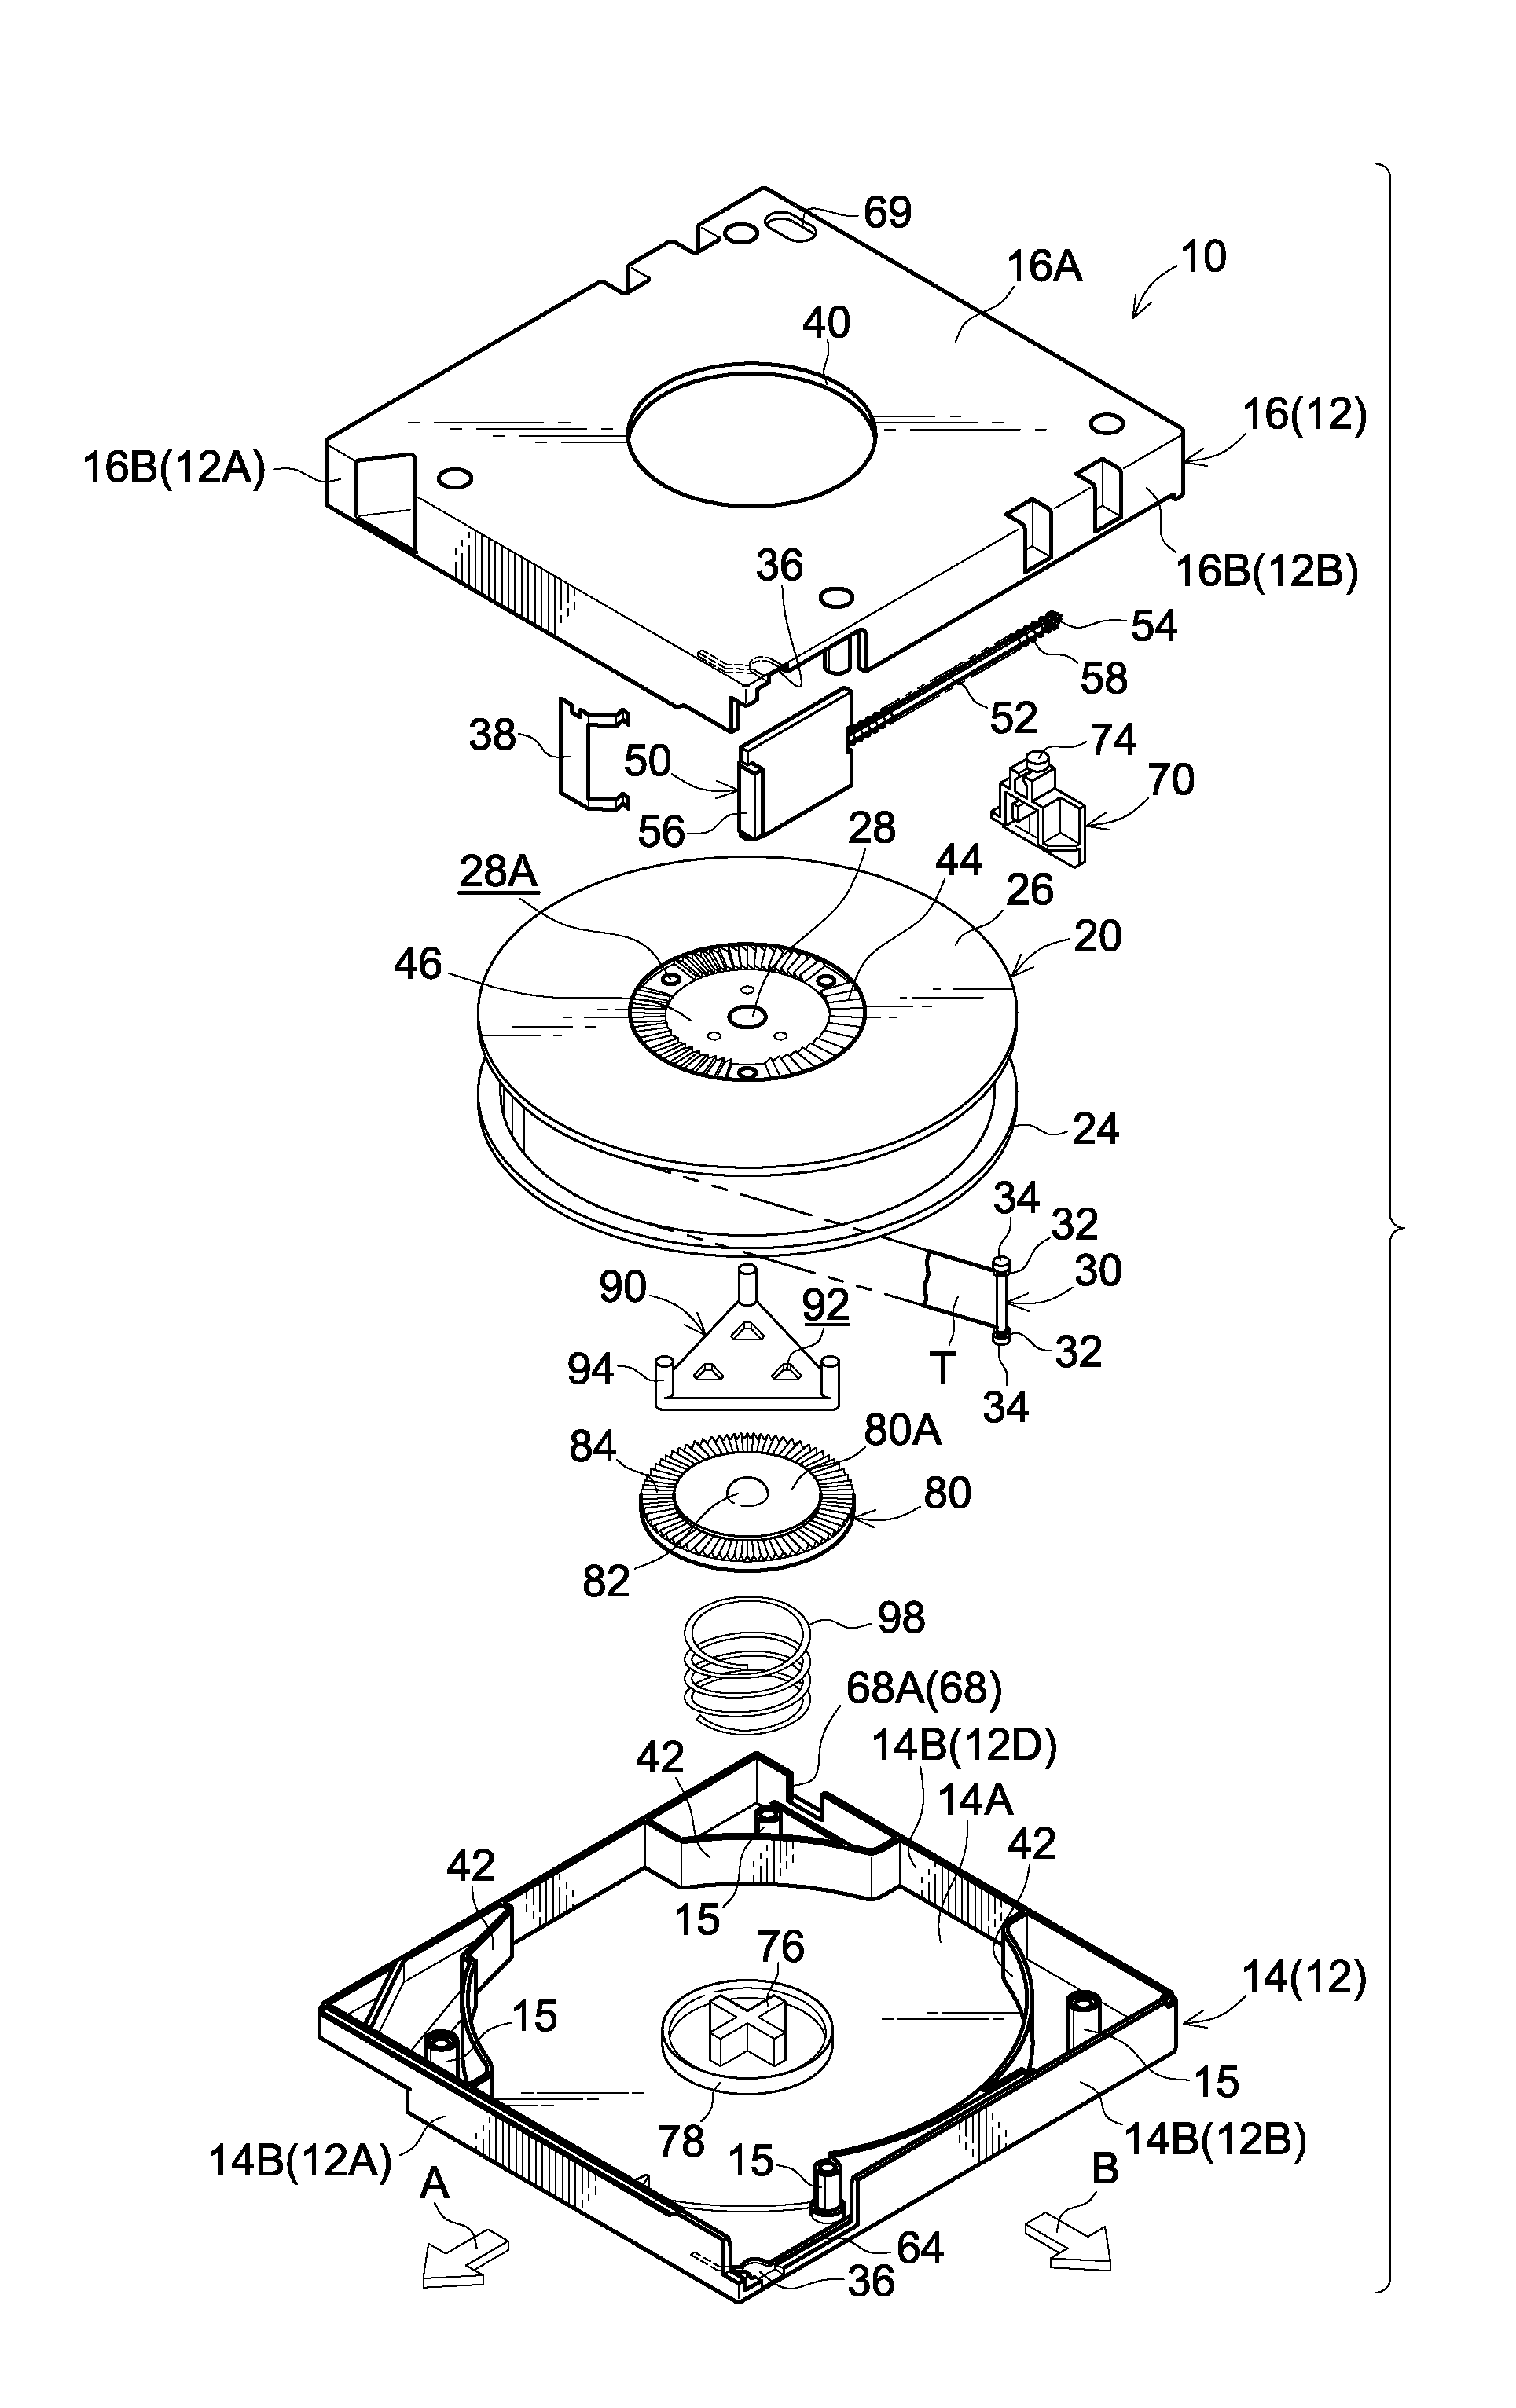 Manufacturing method of reel, reel, and recording tape cartridge